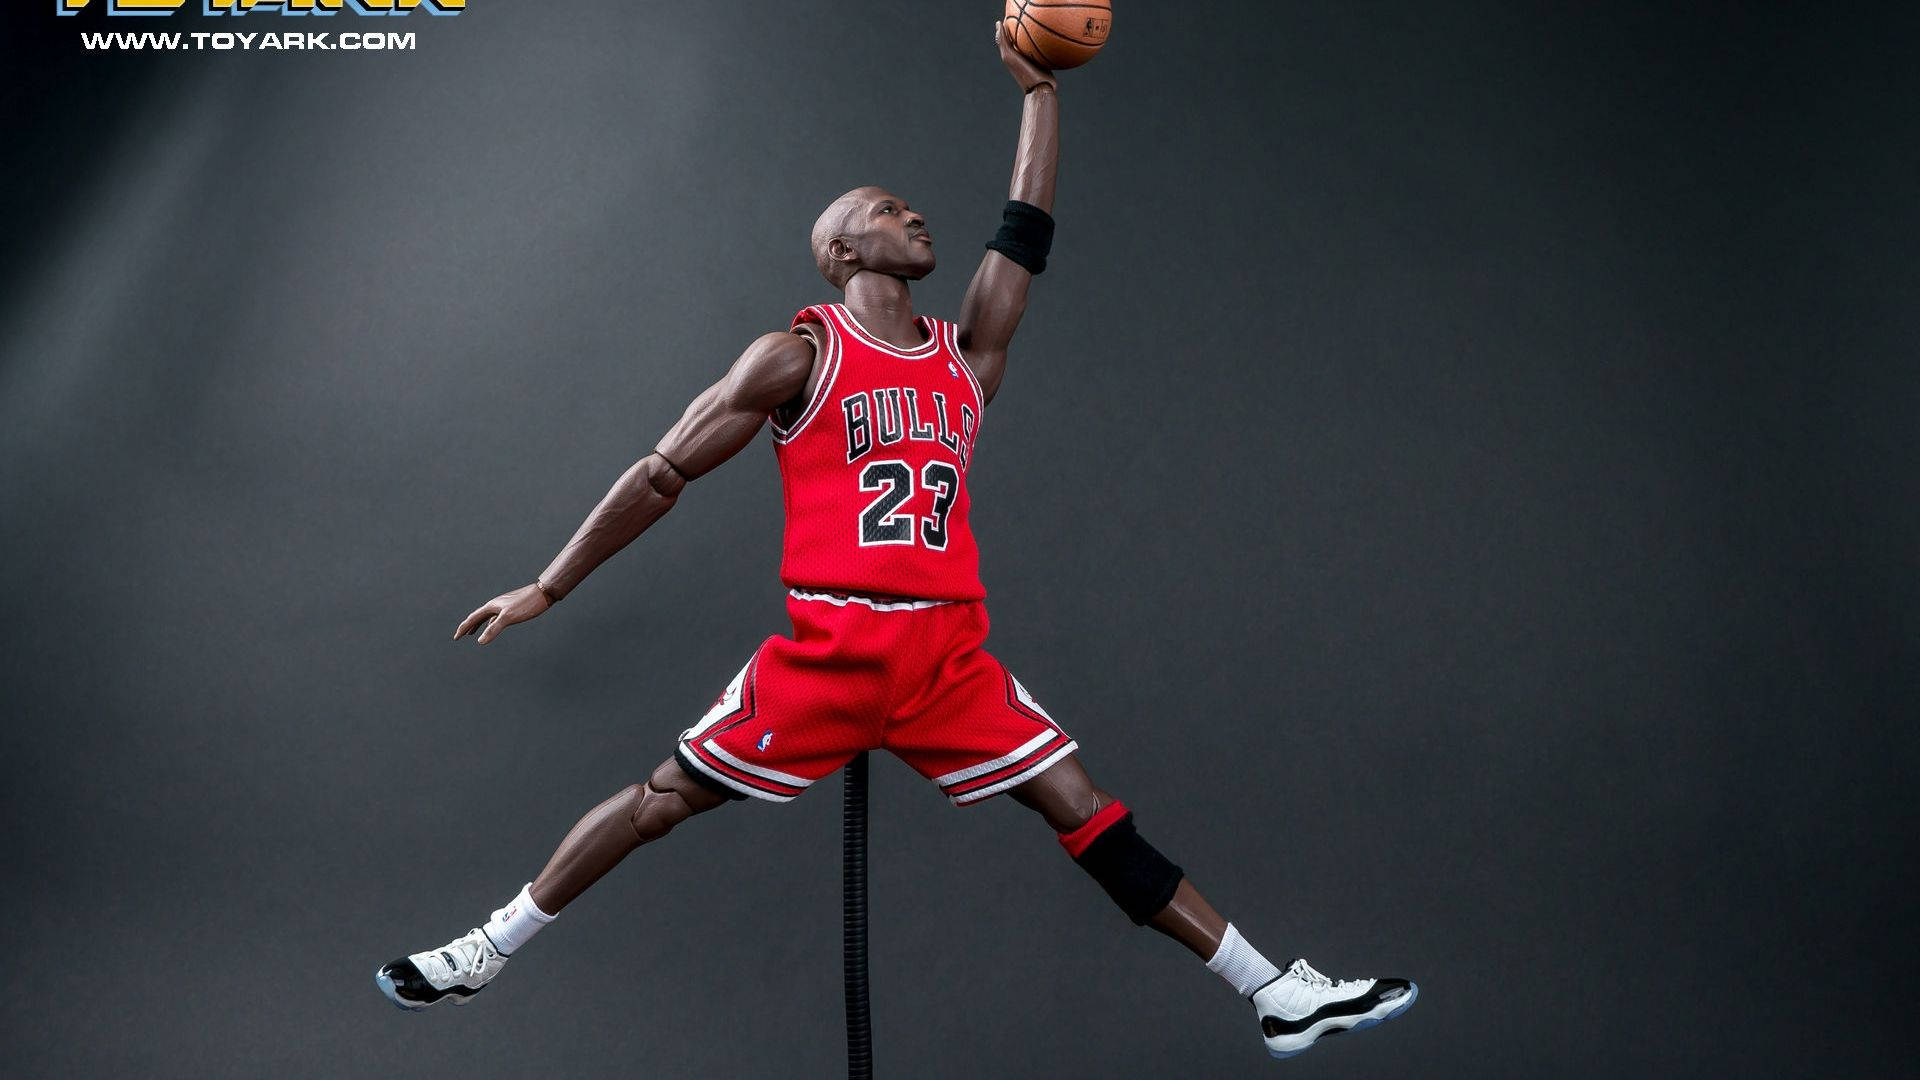 Angetrieben,der Beste Zu Sein - Michael Jordan Wallpaper